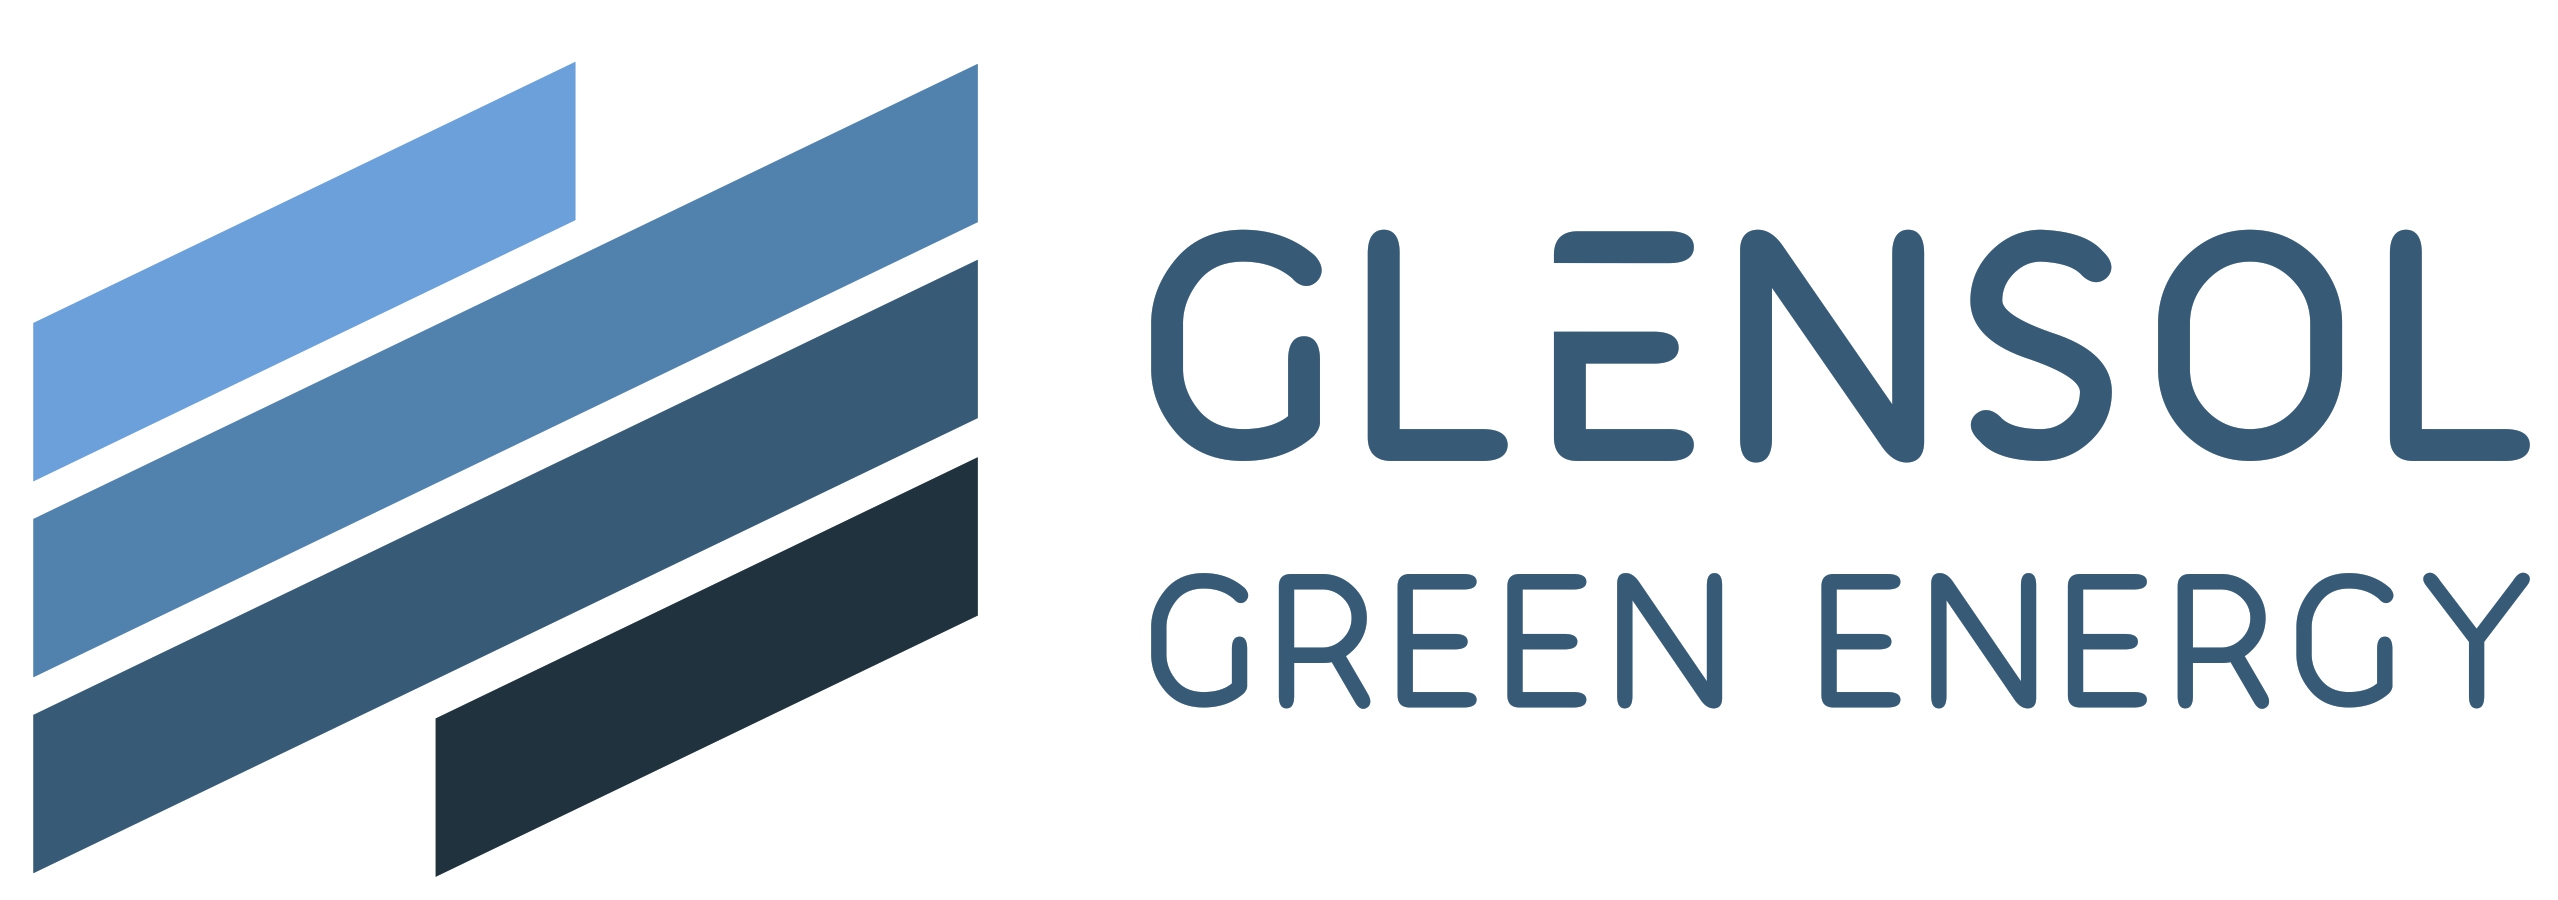 logo Glensol nuevo